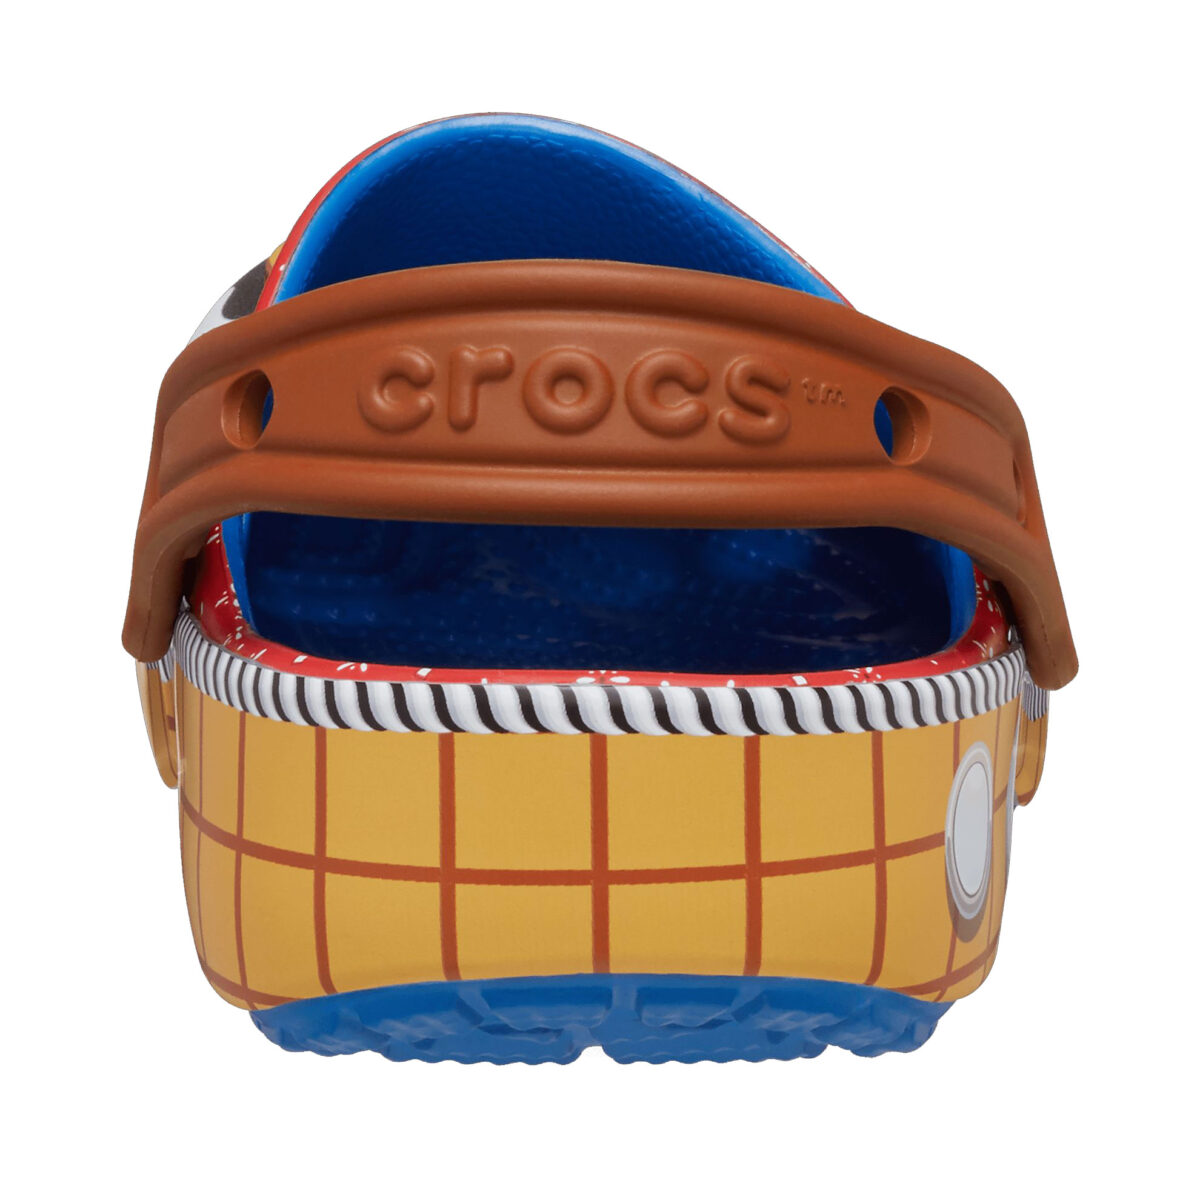 Toy Story x Crocs Classic Clog "Woody"